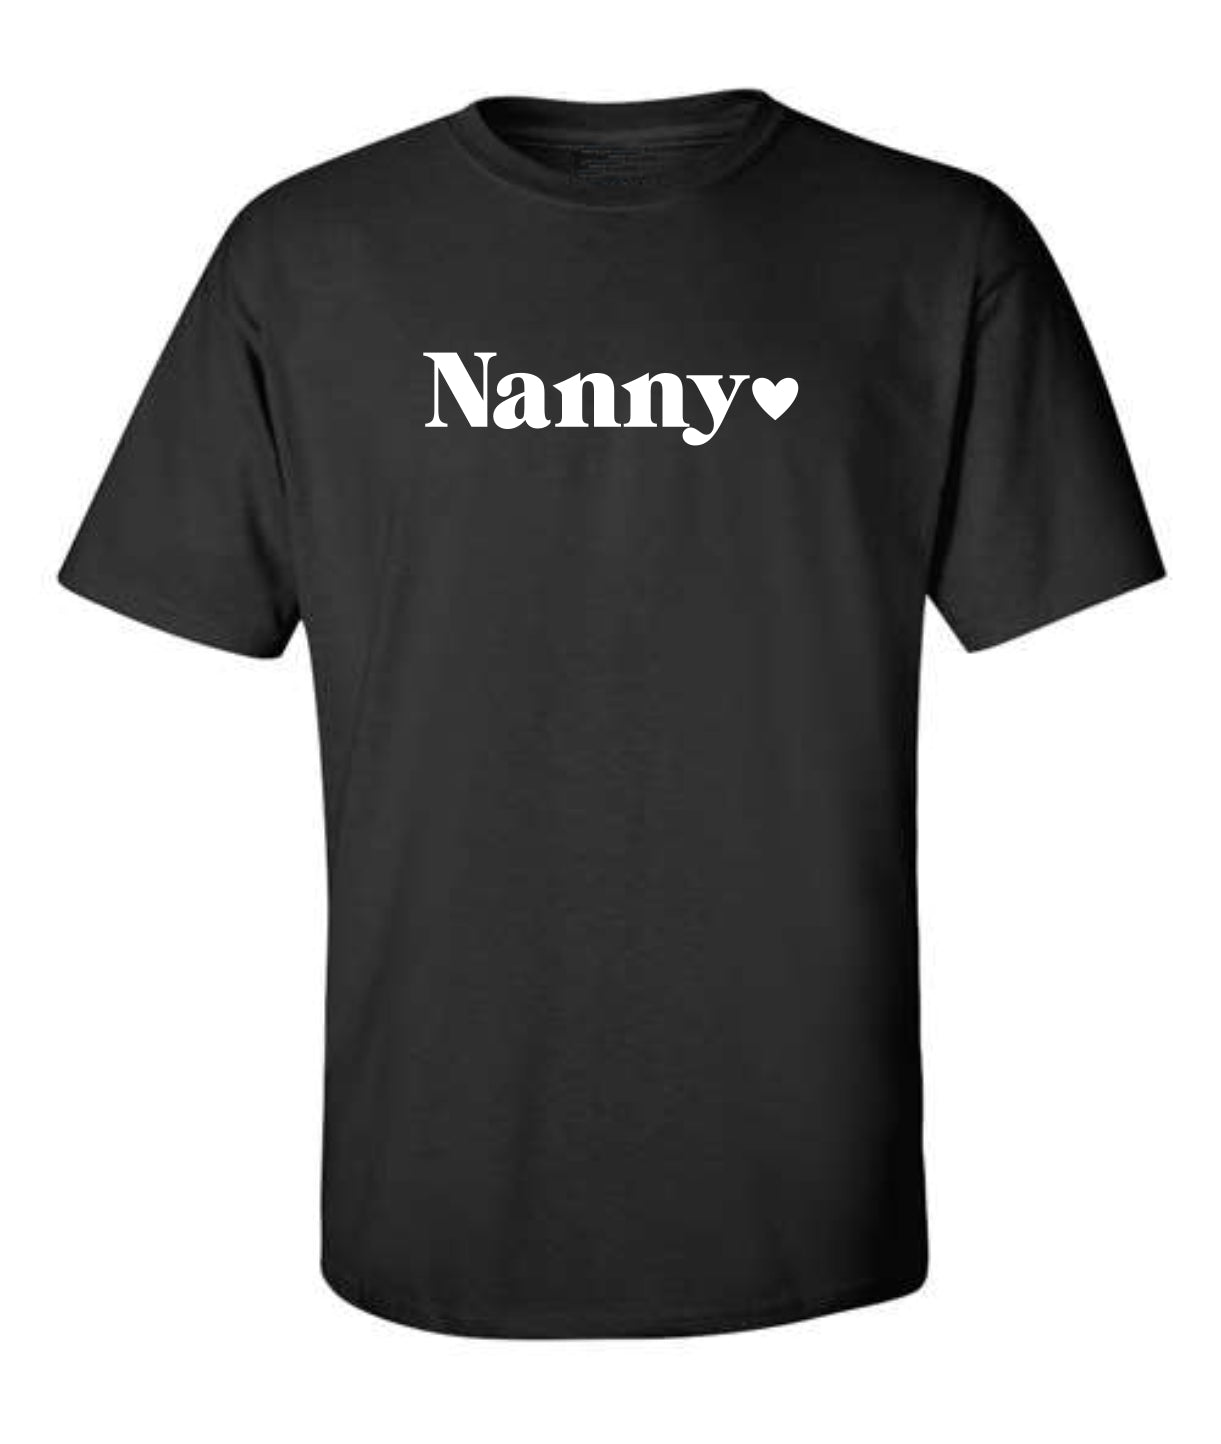 "Nanny" Heart T-Shirt